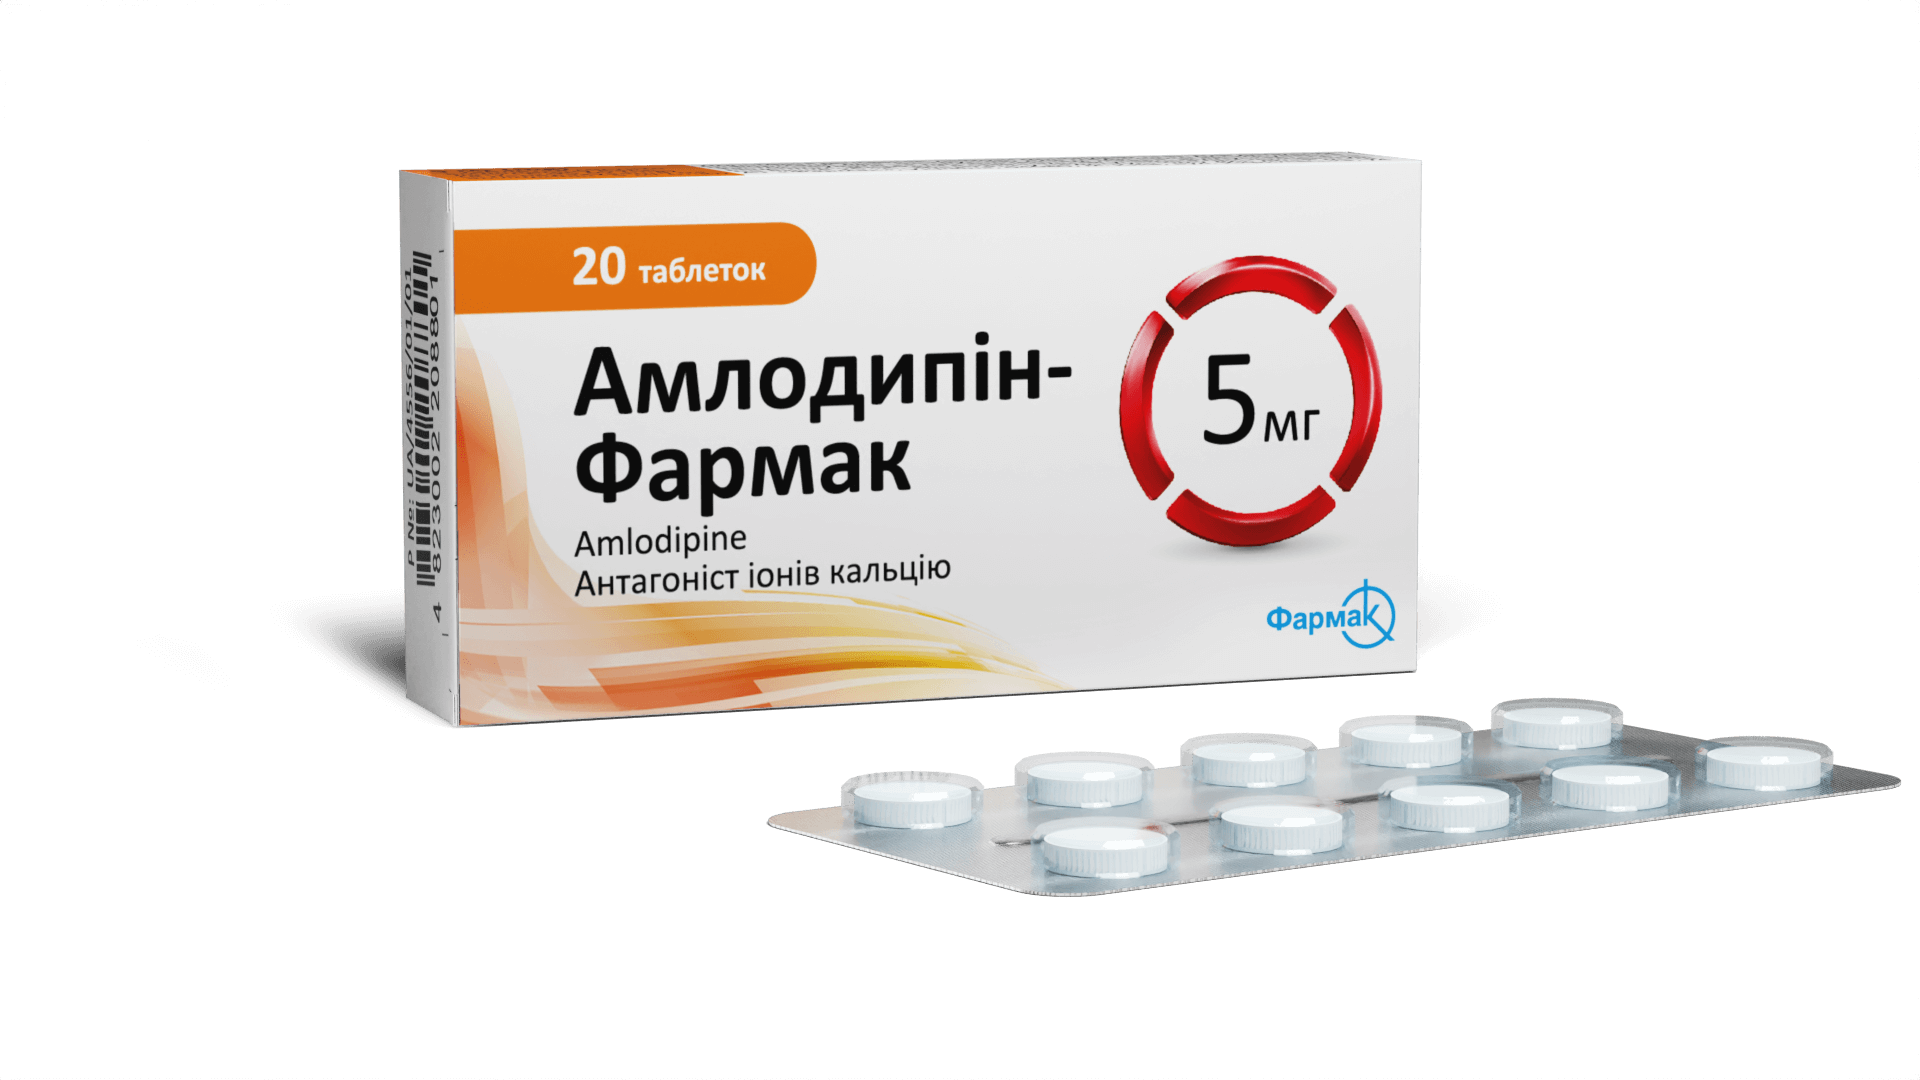 Амлодипин-Фармак 5 мг (1)